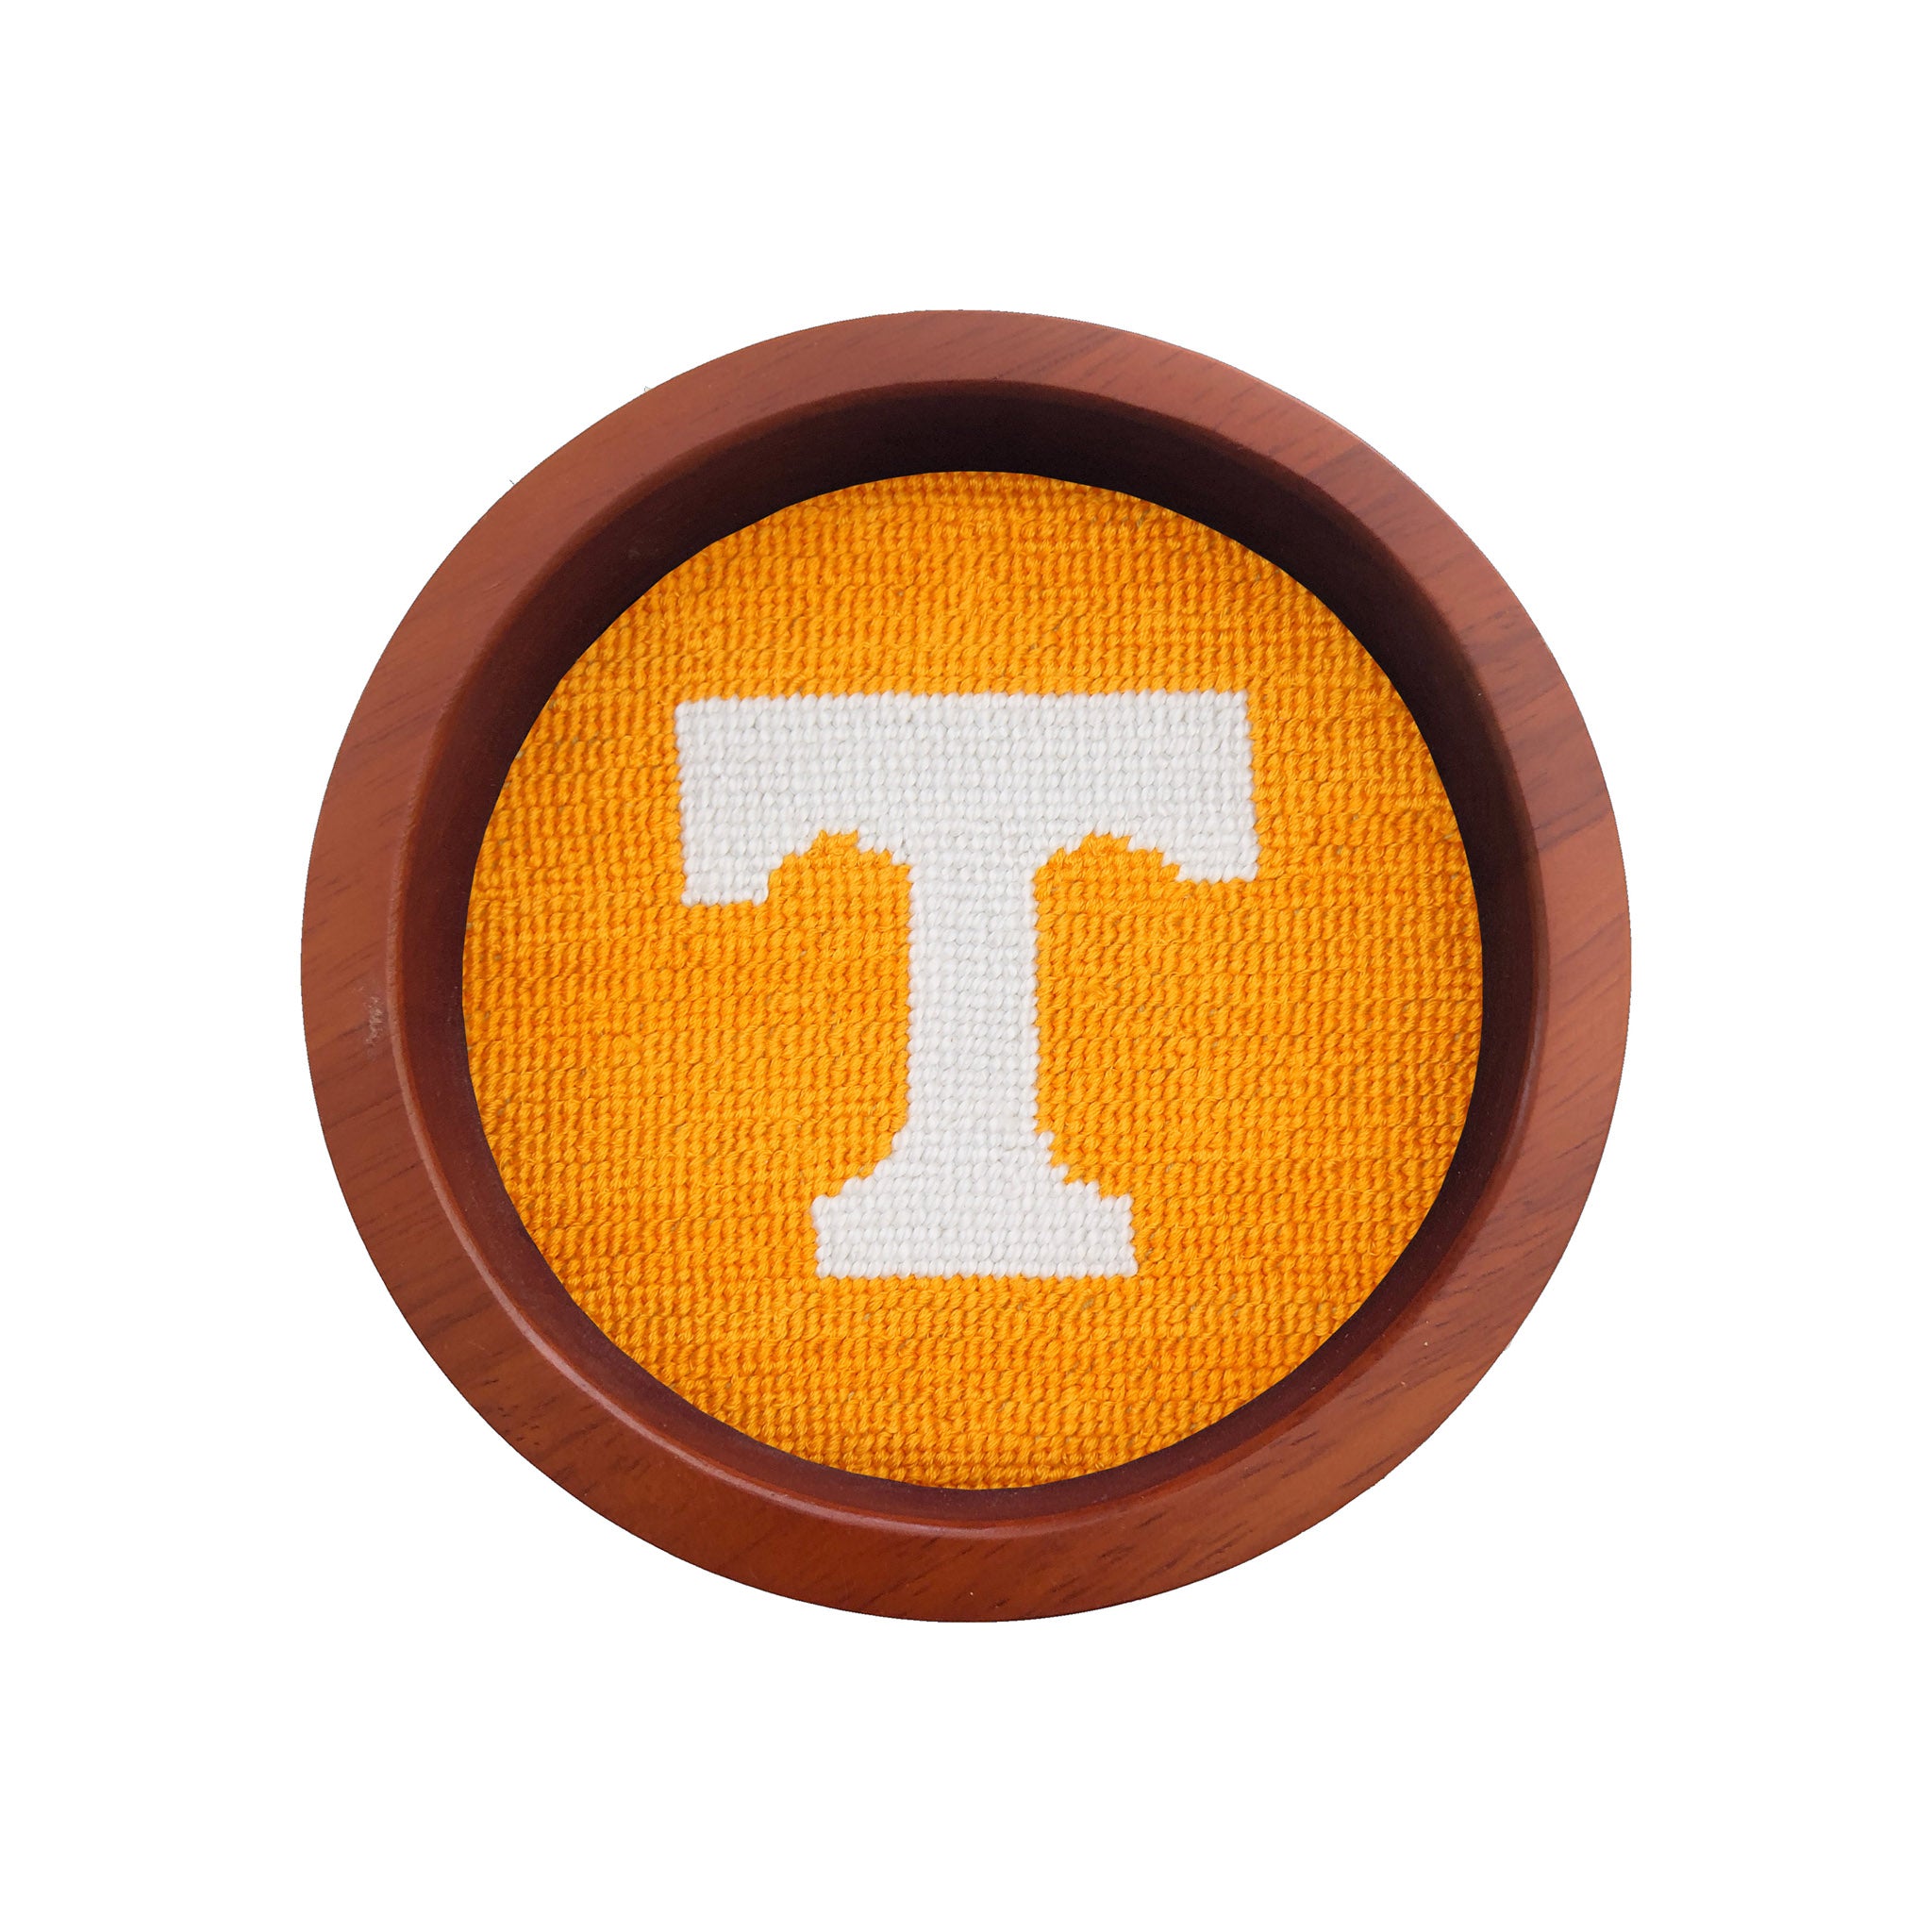 Tennessee Power T Wine Bottle Coaster (Orange)